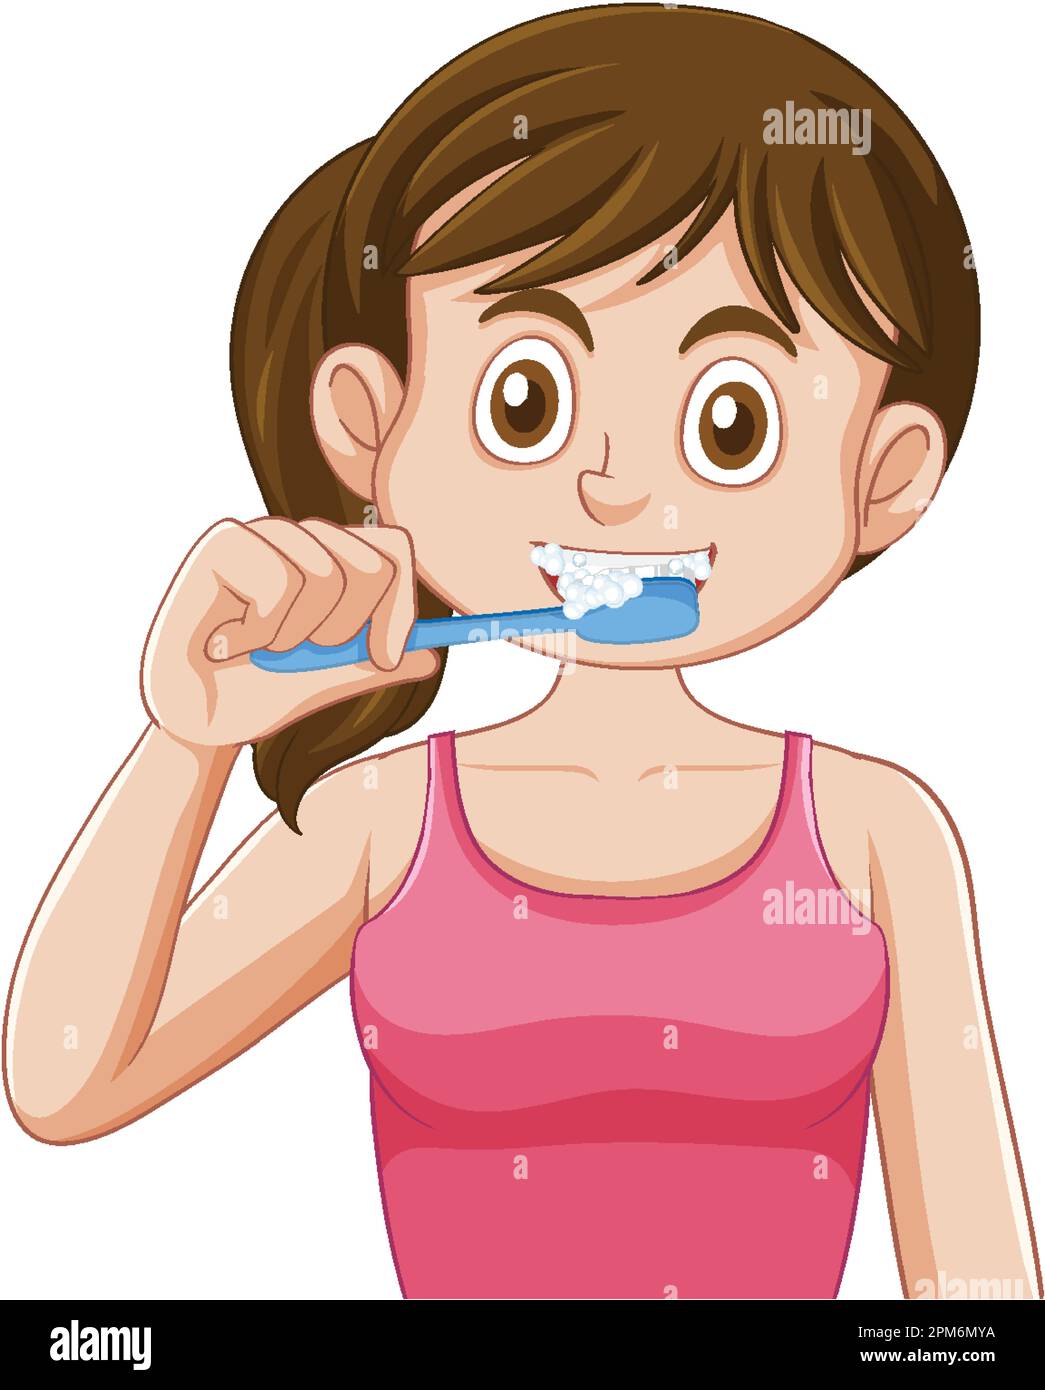 A girl brushing her teeth illustration Stock Vector